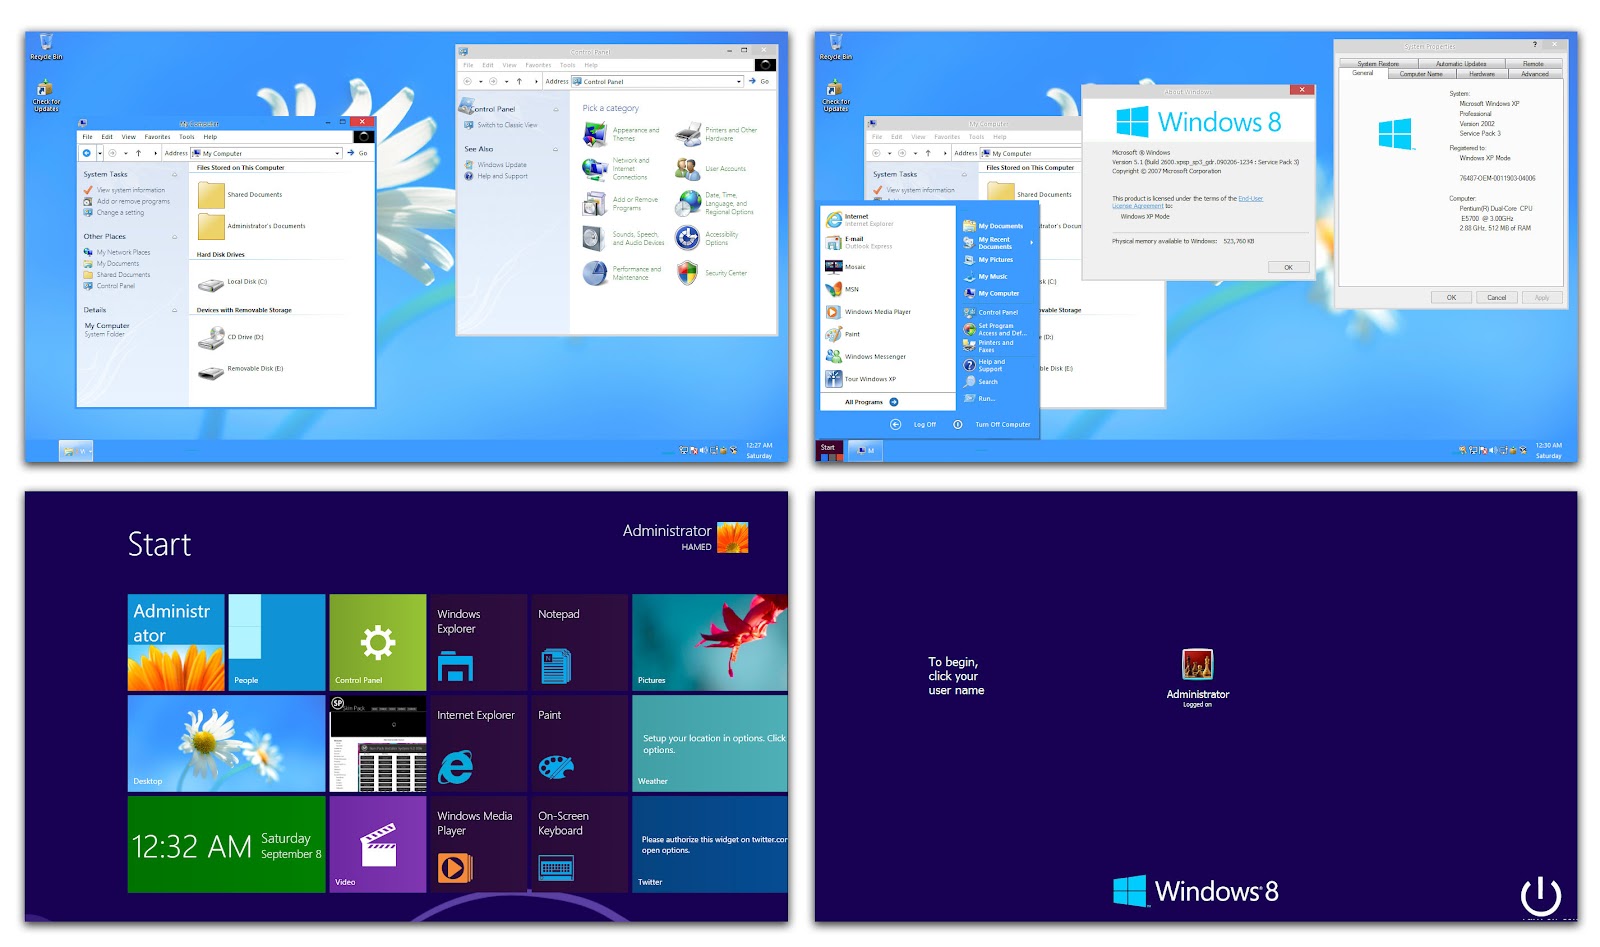 Windows transformer. Windows 8 Skin Pack. Windows Vista Skin Pack. Skin Pack Windows XP. Windows 8 Skin Pack for XP.